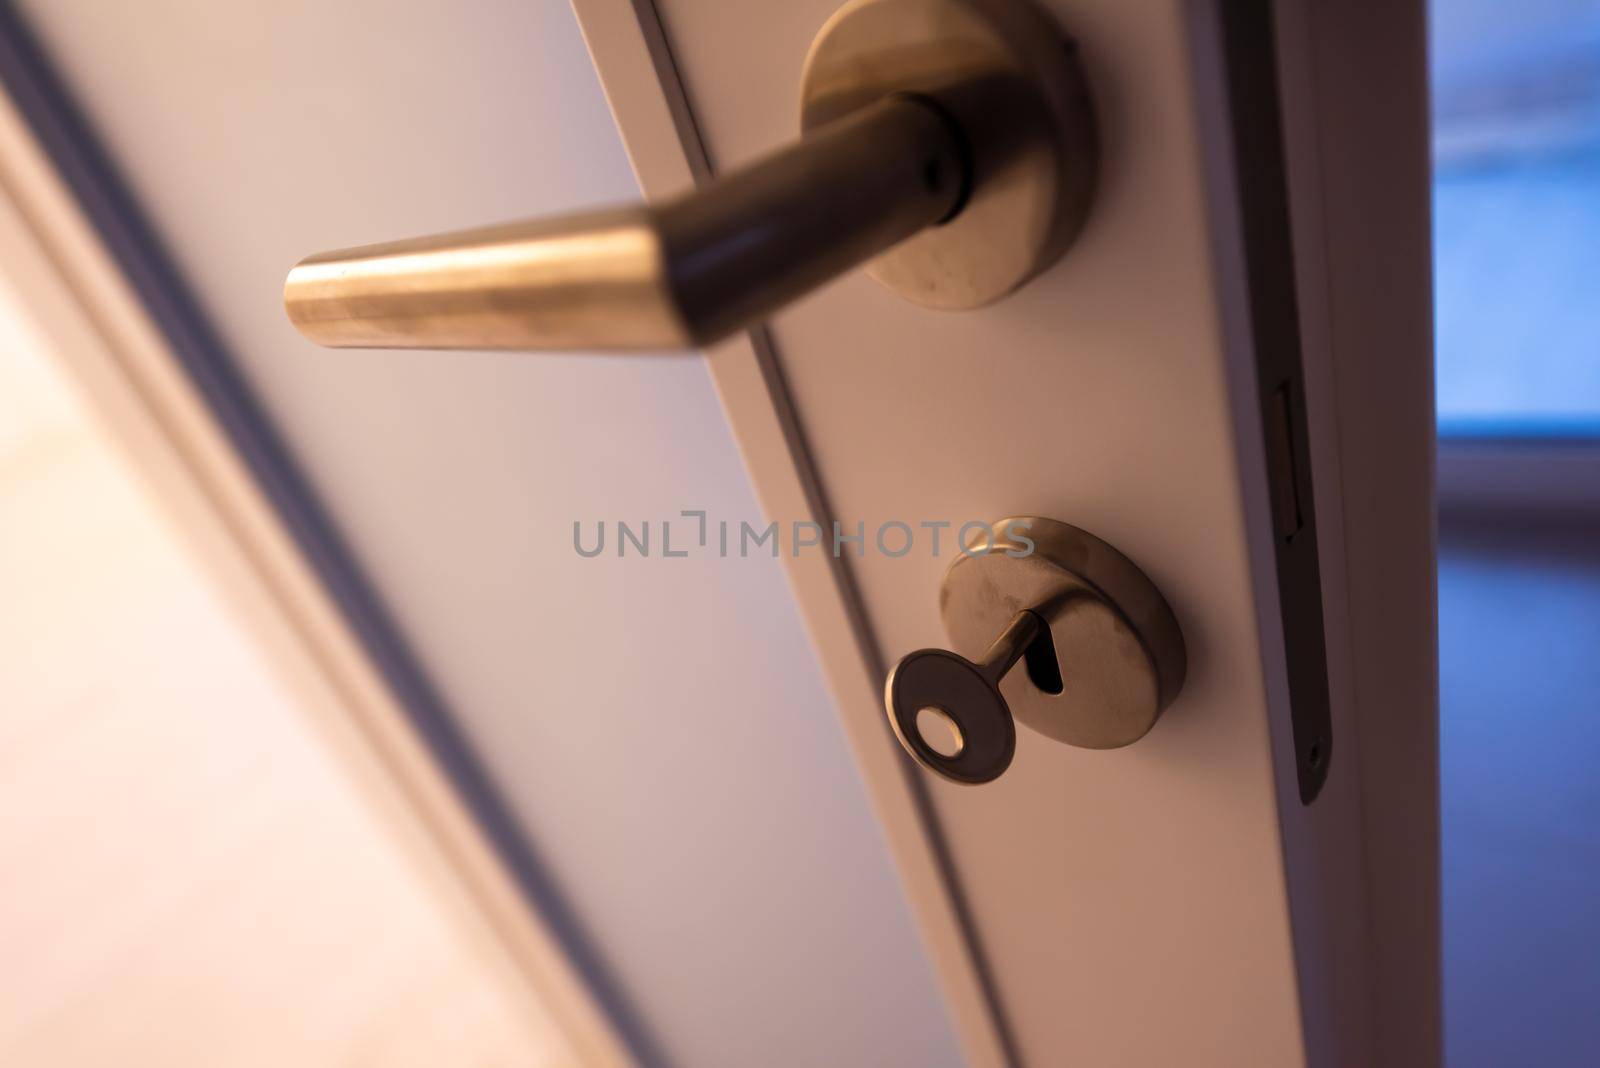 close up of door handle in room interior with Key in the lock